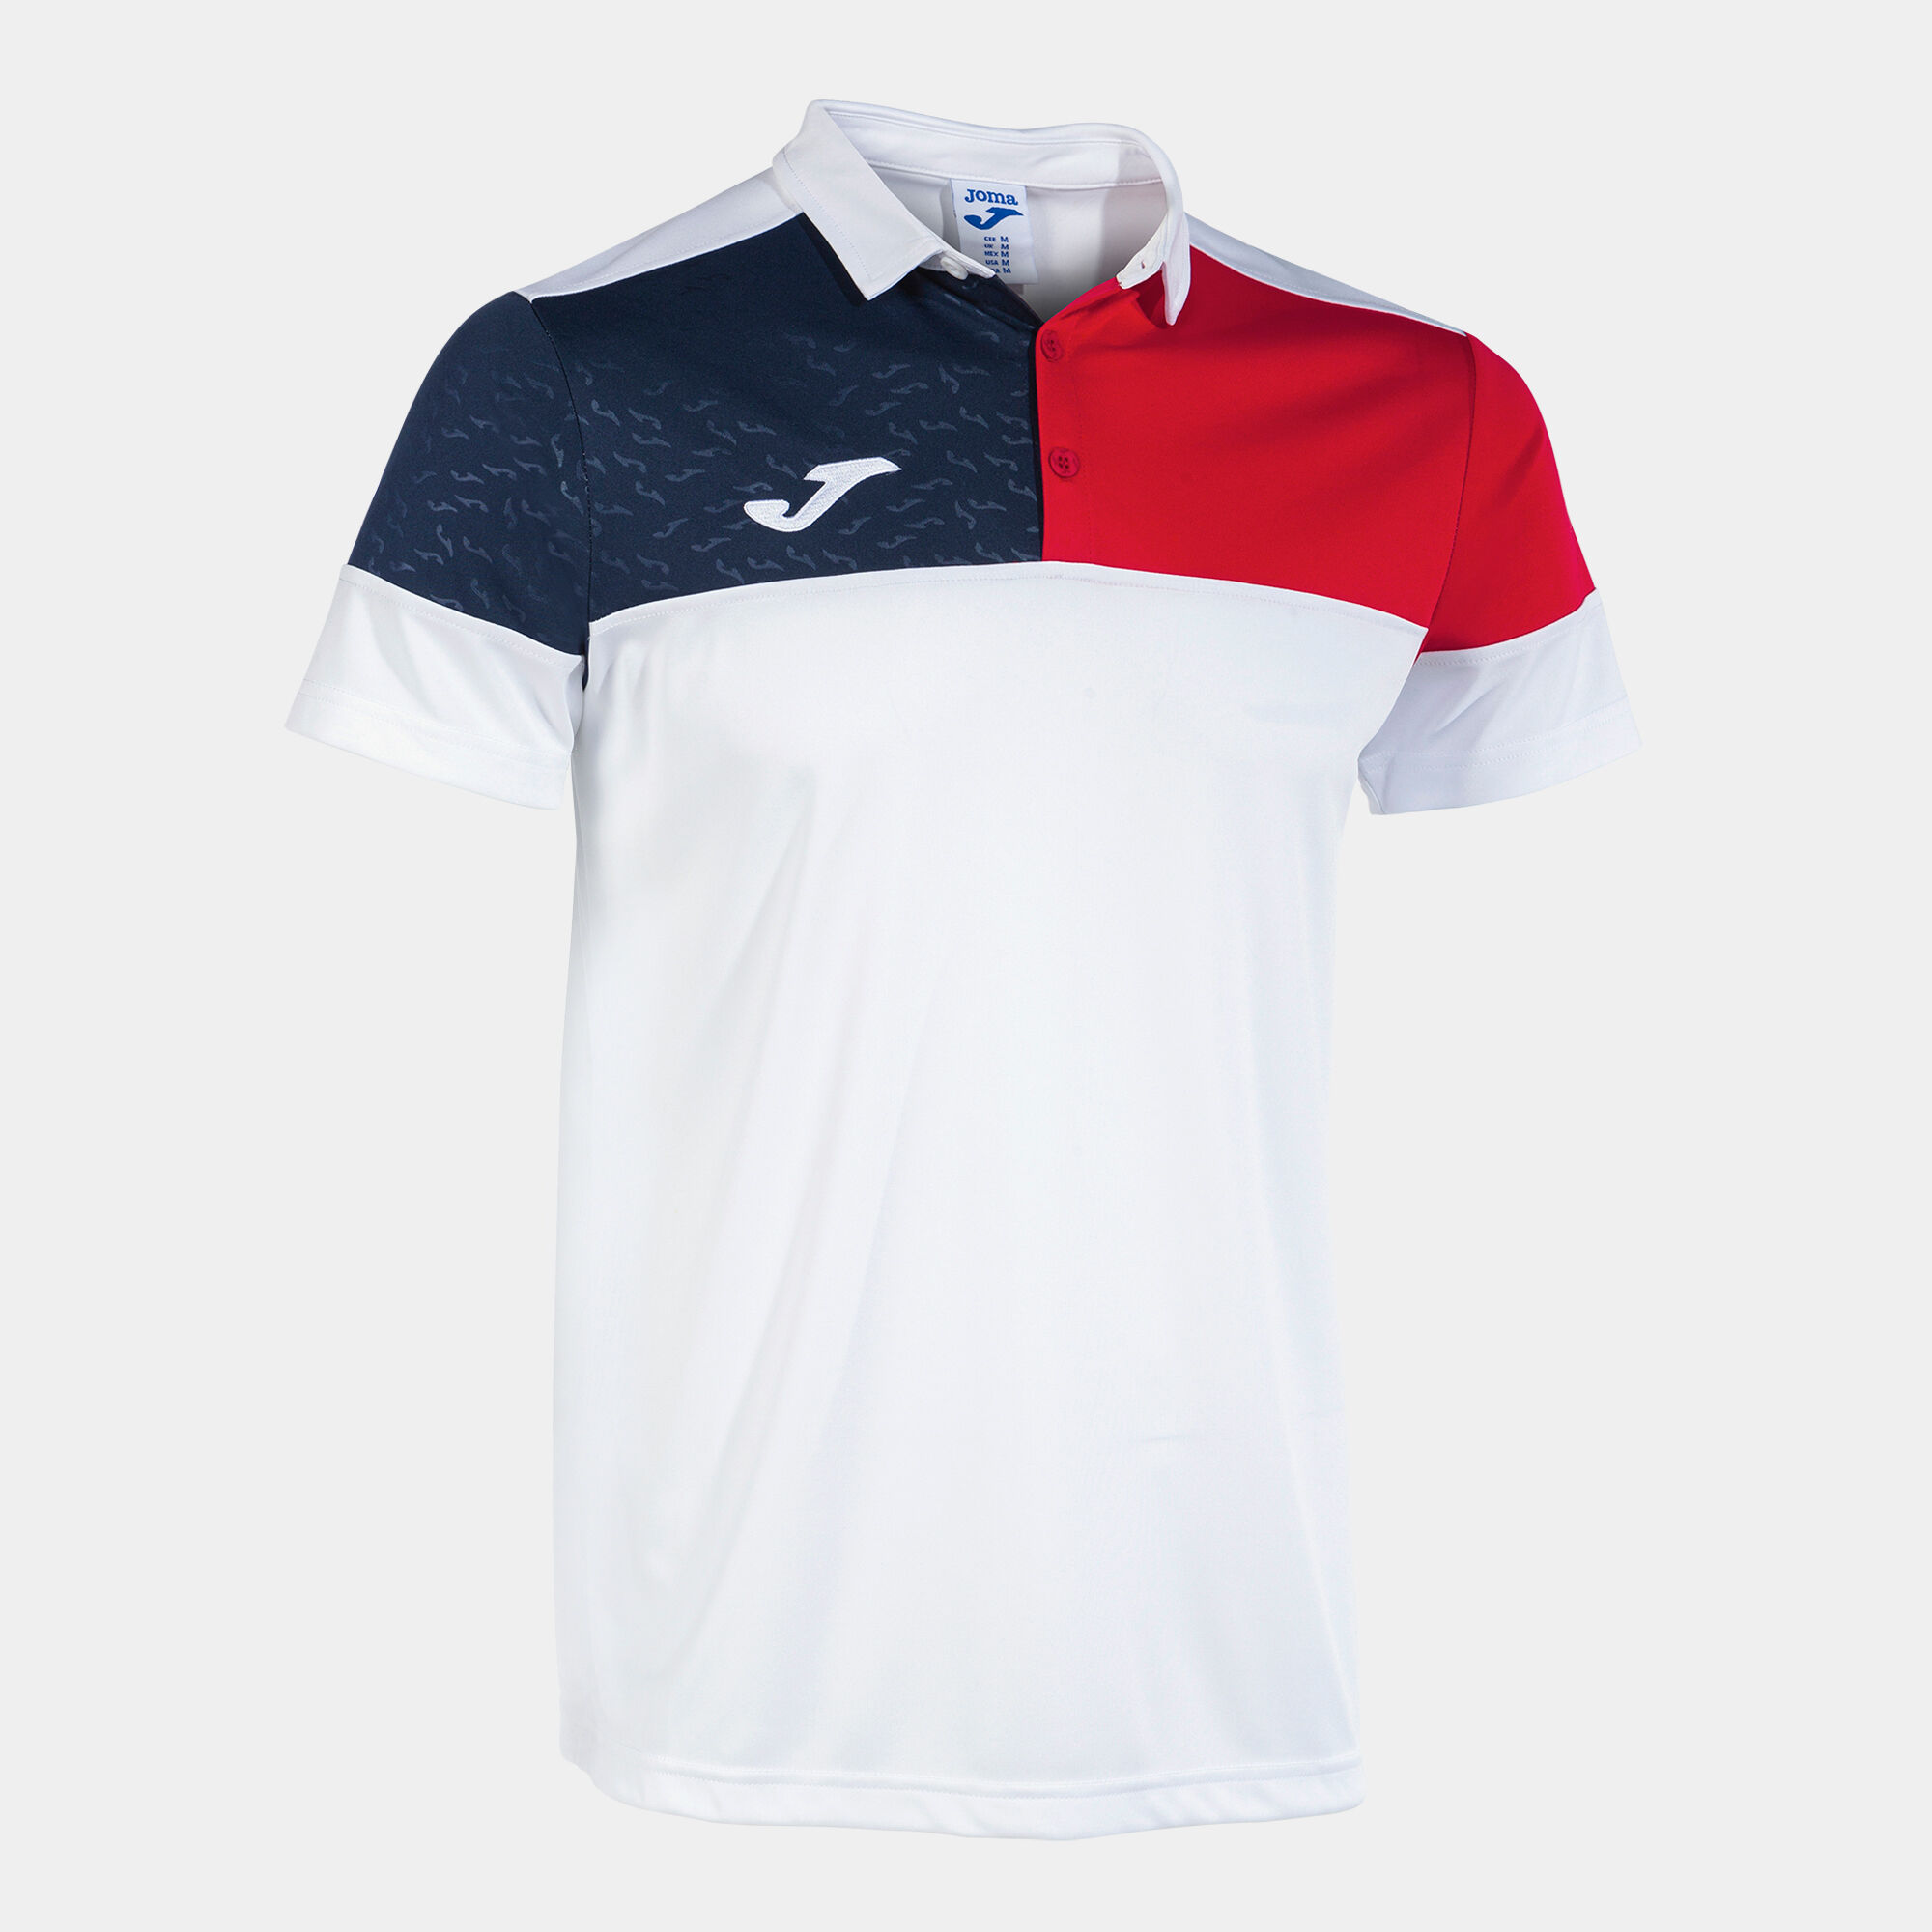 Polo shirt short-sleeve man Crew V white red